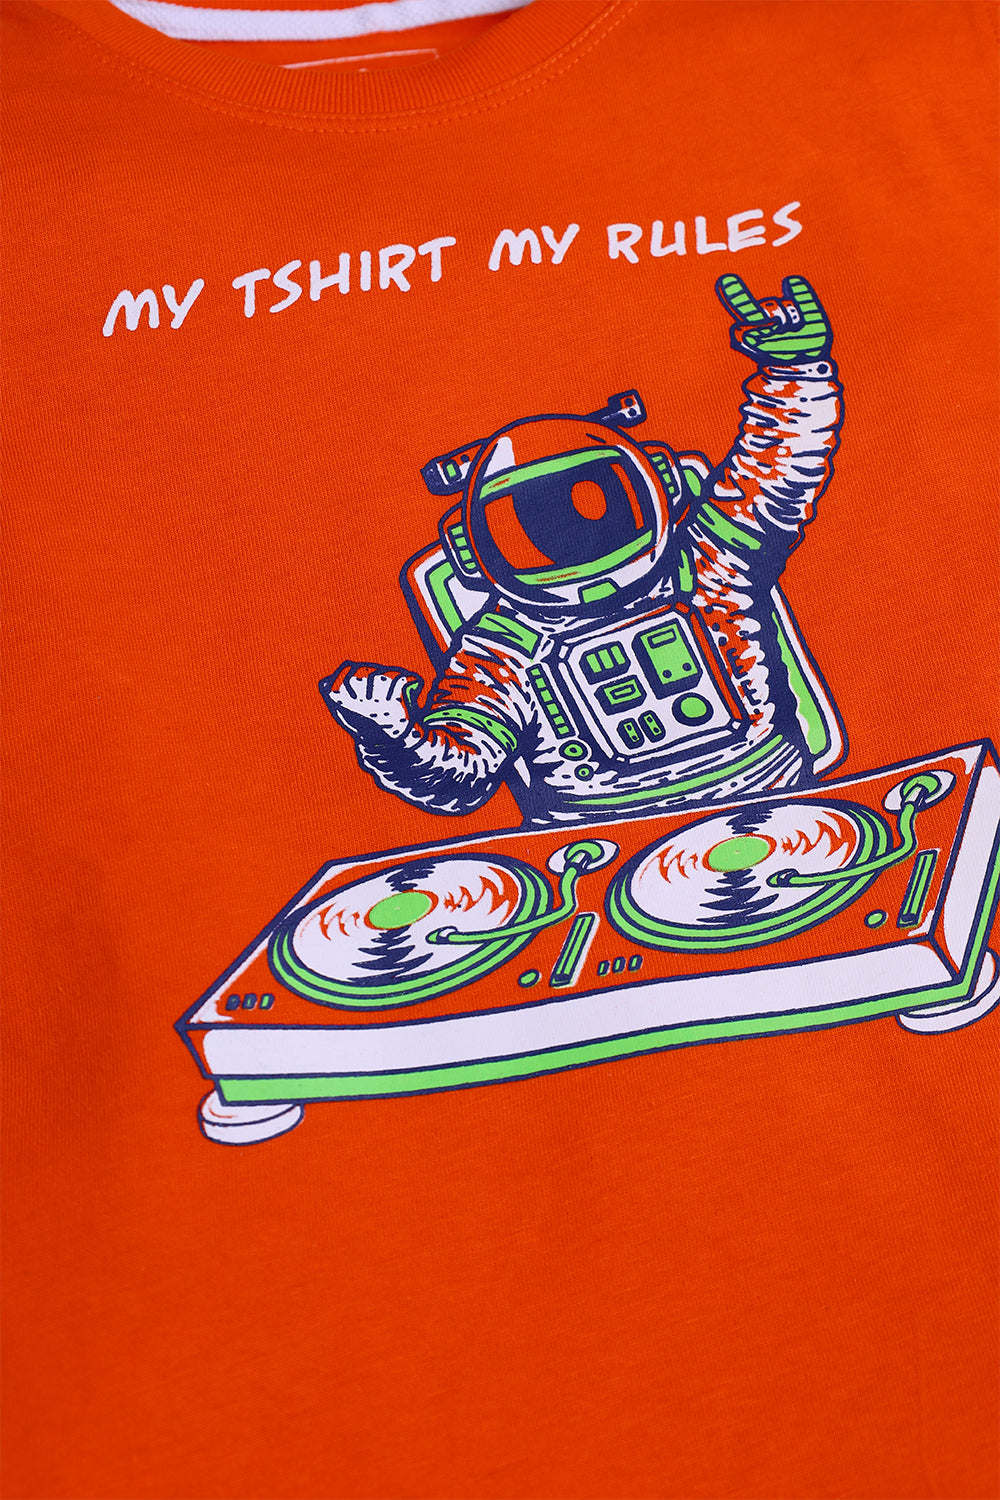 Astronaut graphic T-shirt 100% cotton jersey fabric